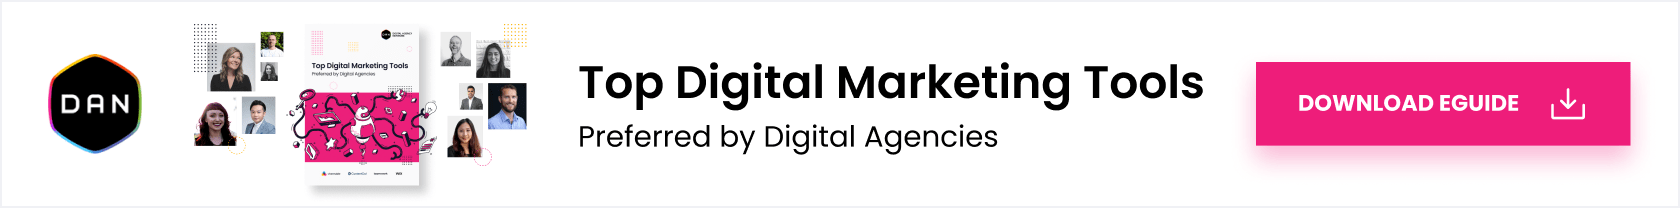 top-digital-marketing-tools-eguide-inpage-desktop